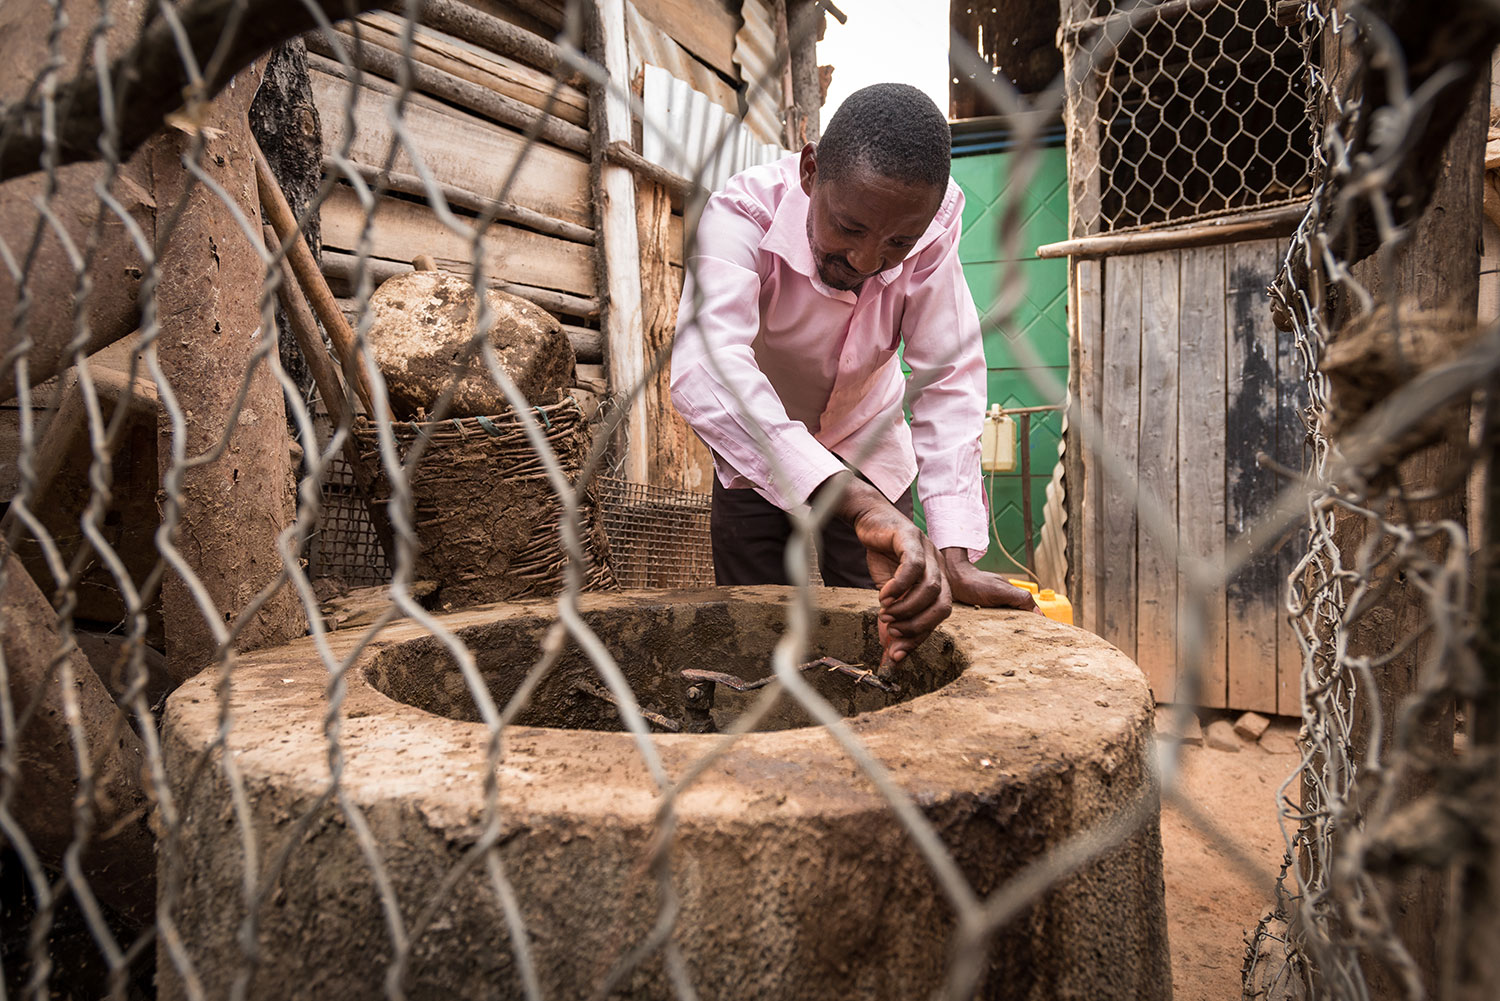 Phocas works at his farm in Rwanda